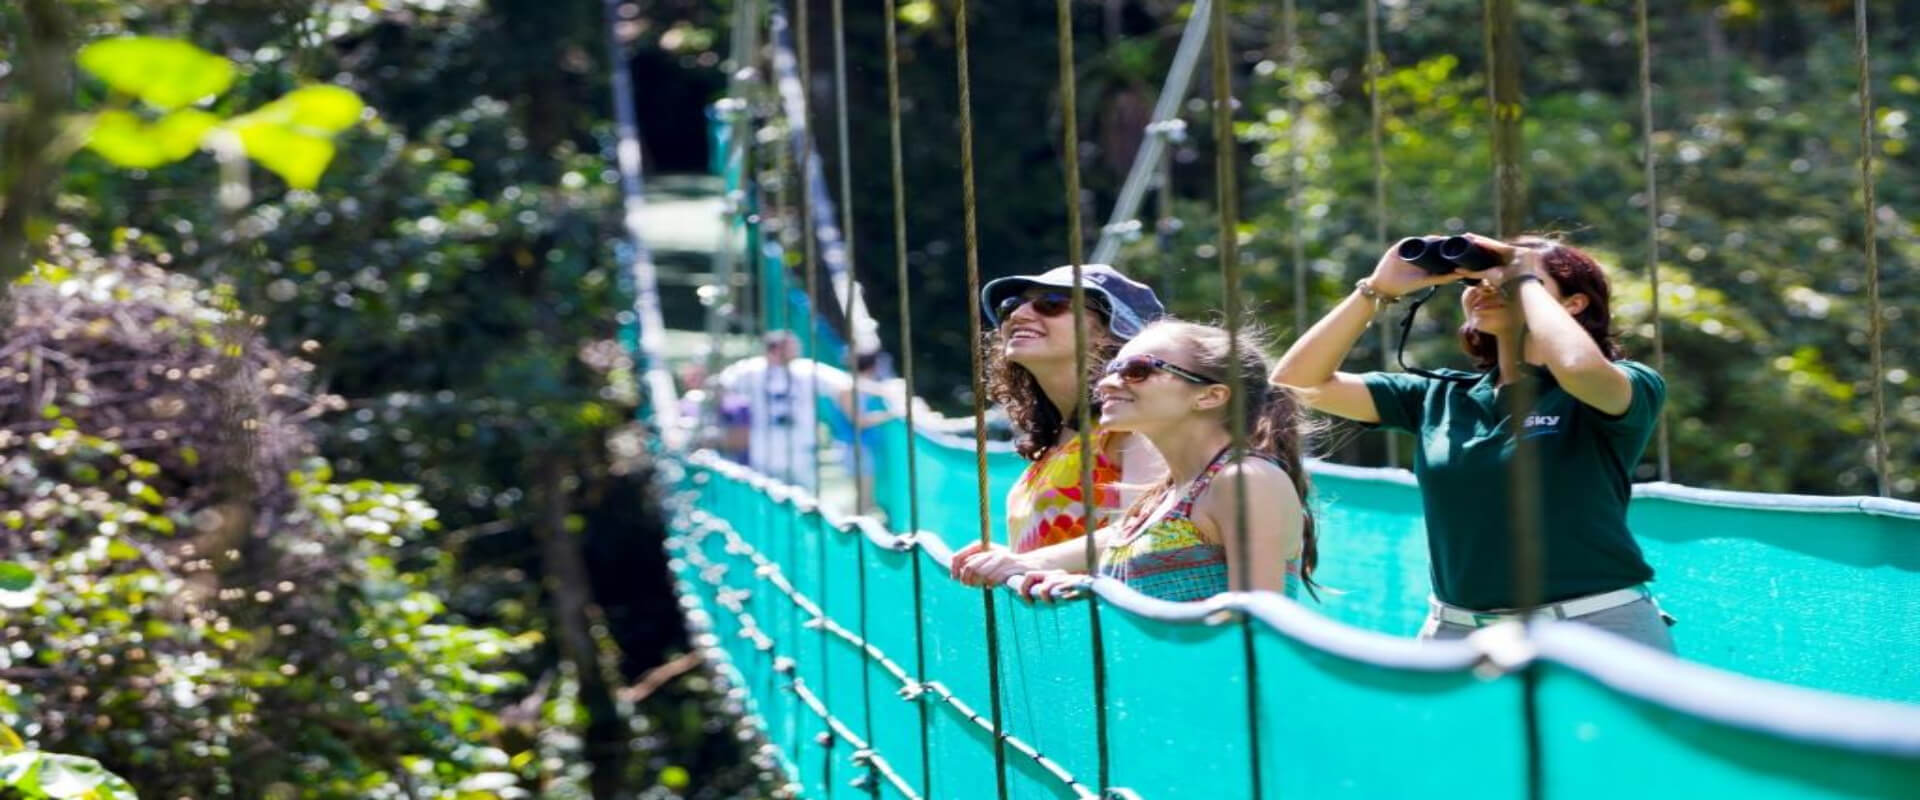 Sky Tram & Sky Walk Monteverde | Costa Rica Jade Tours